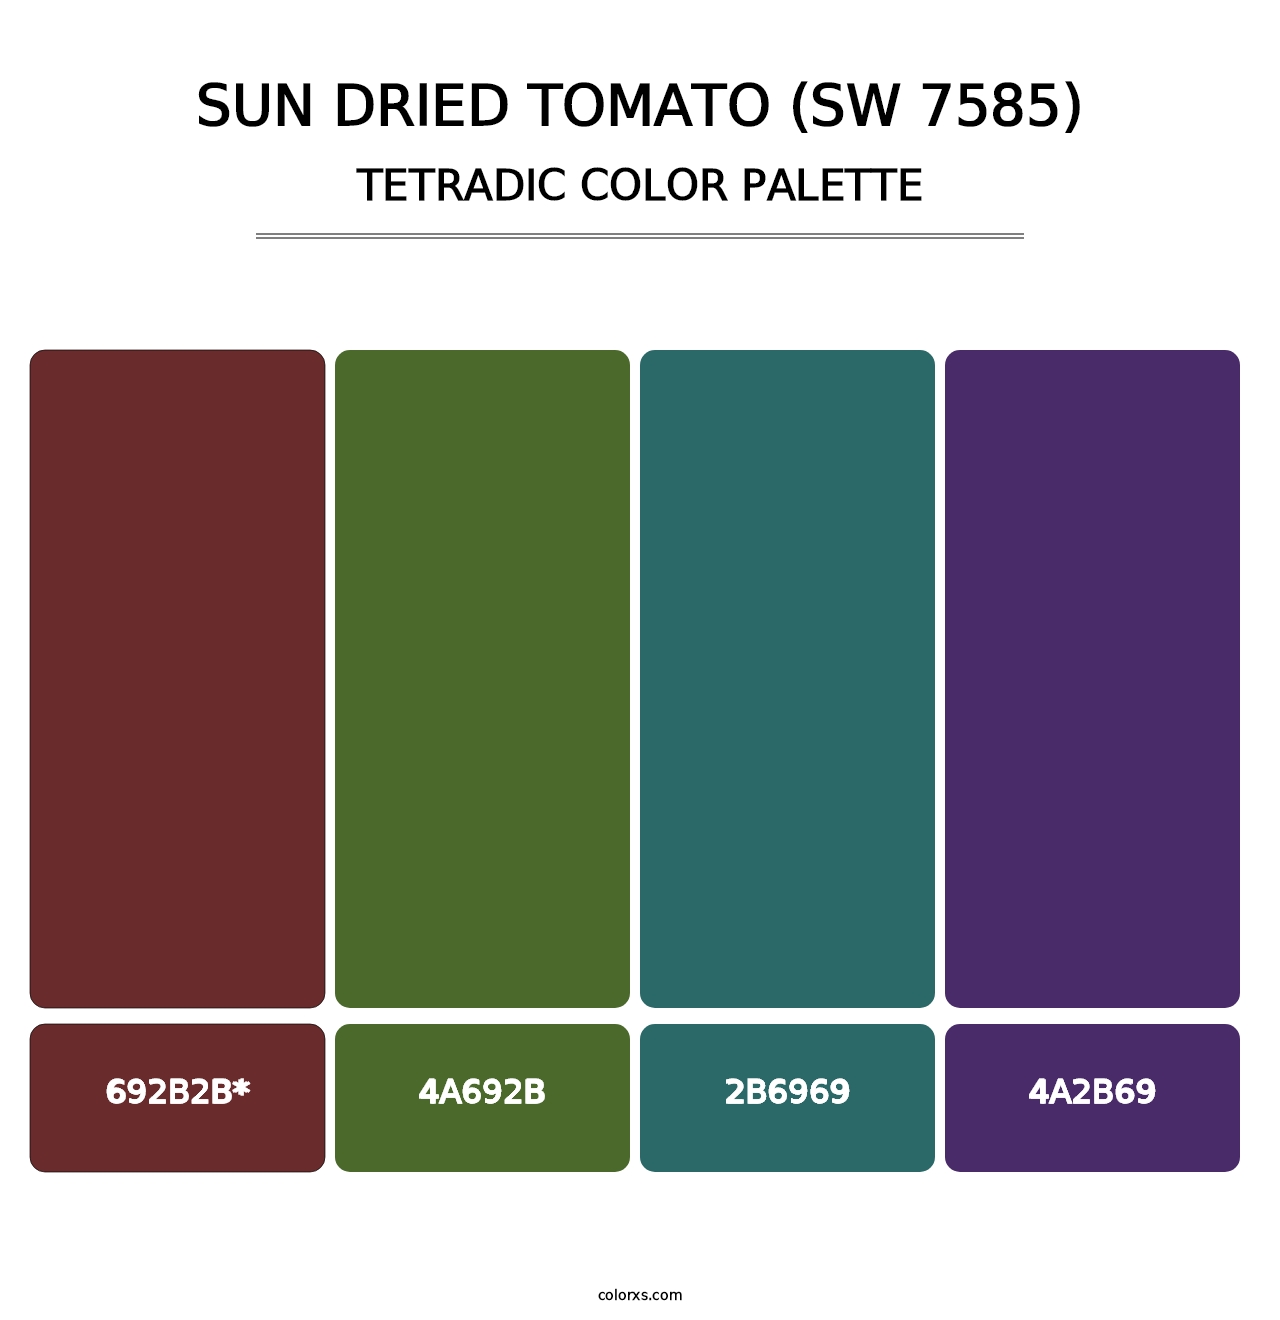 Sun Dried Tomato (SW 7585) - Tetradic Color Palette